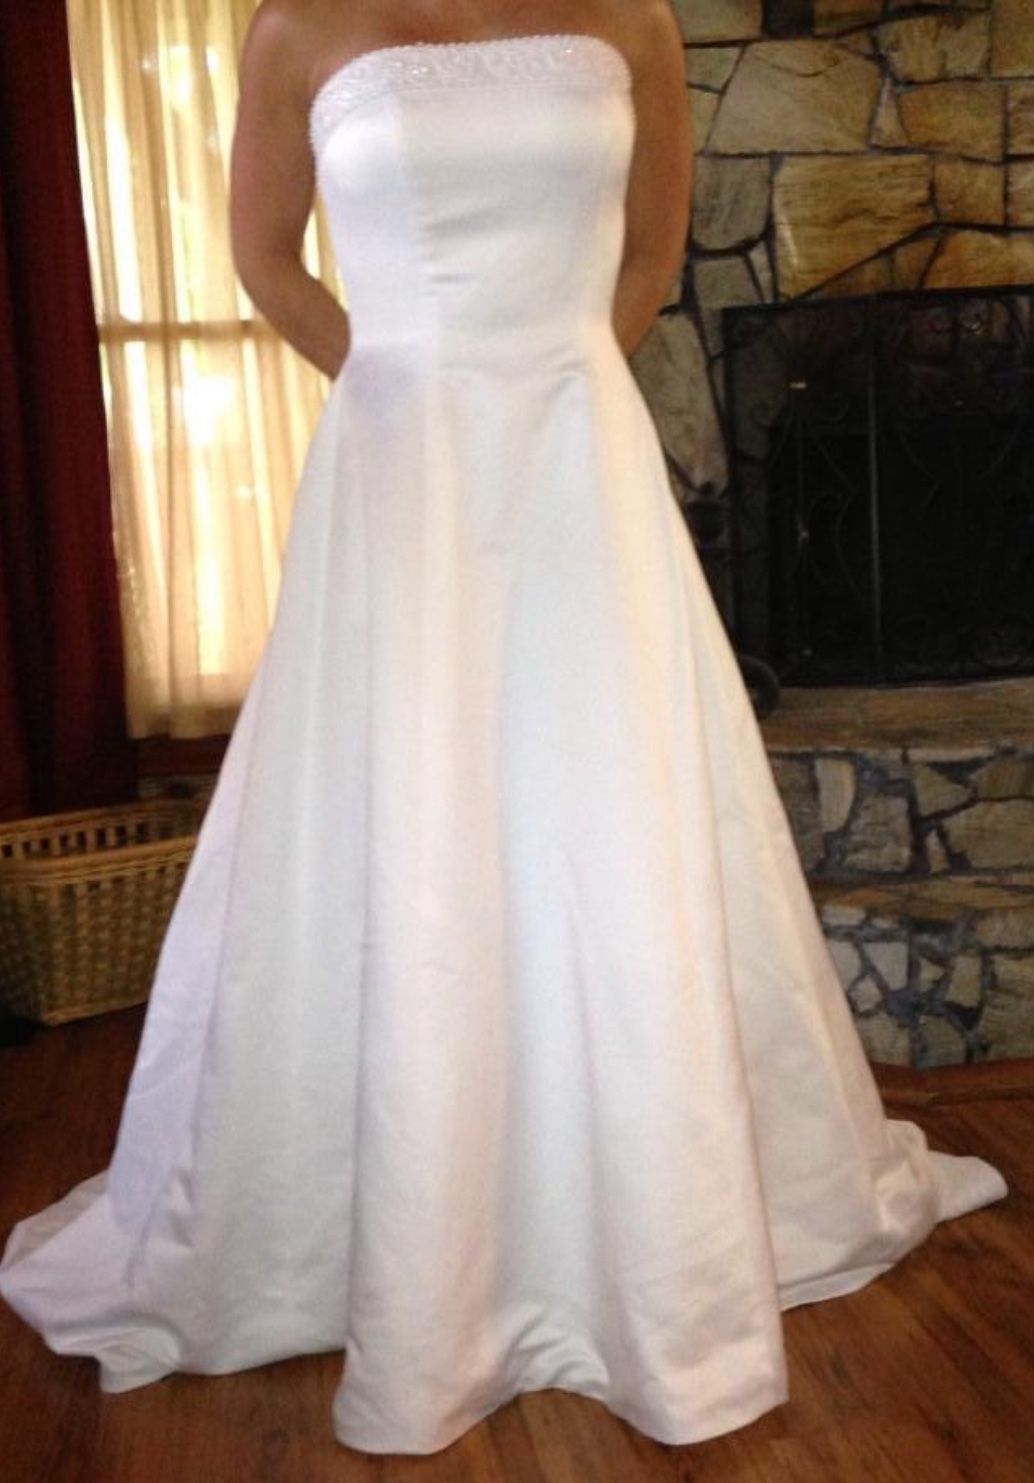 David’s Bridal Wedding Gown, White, Size 14